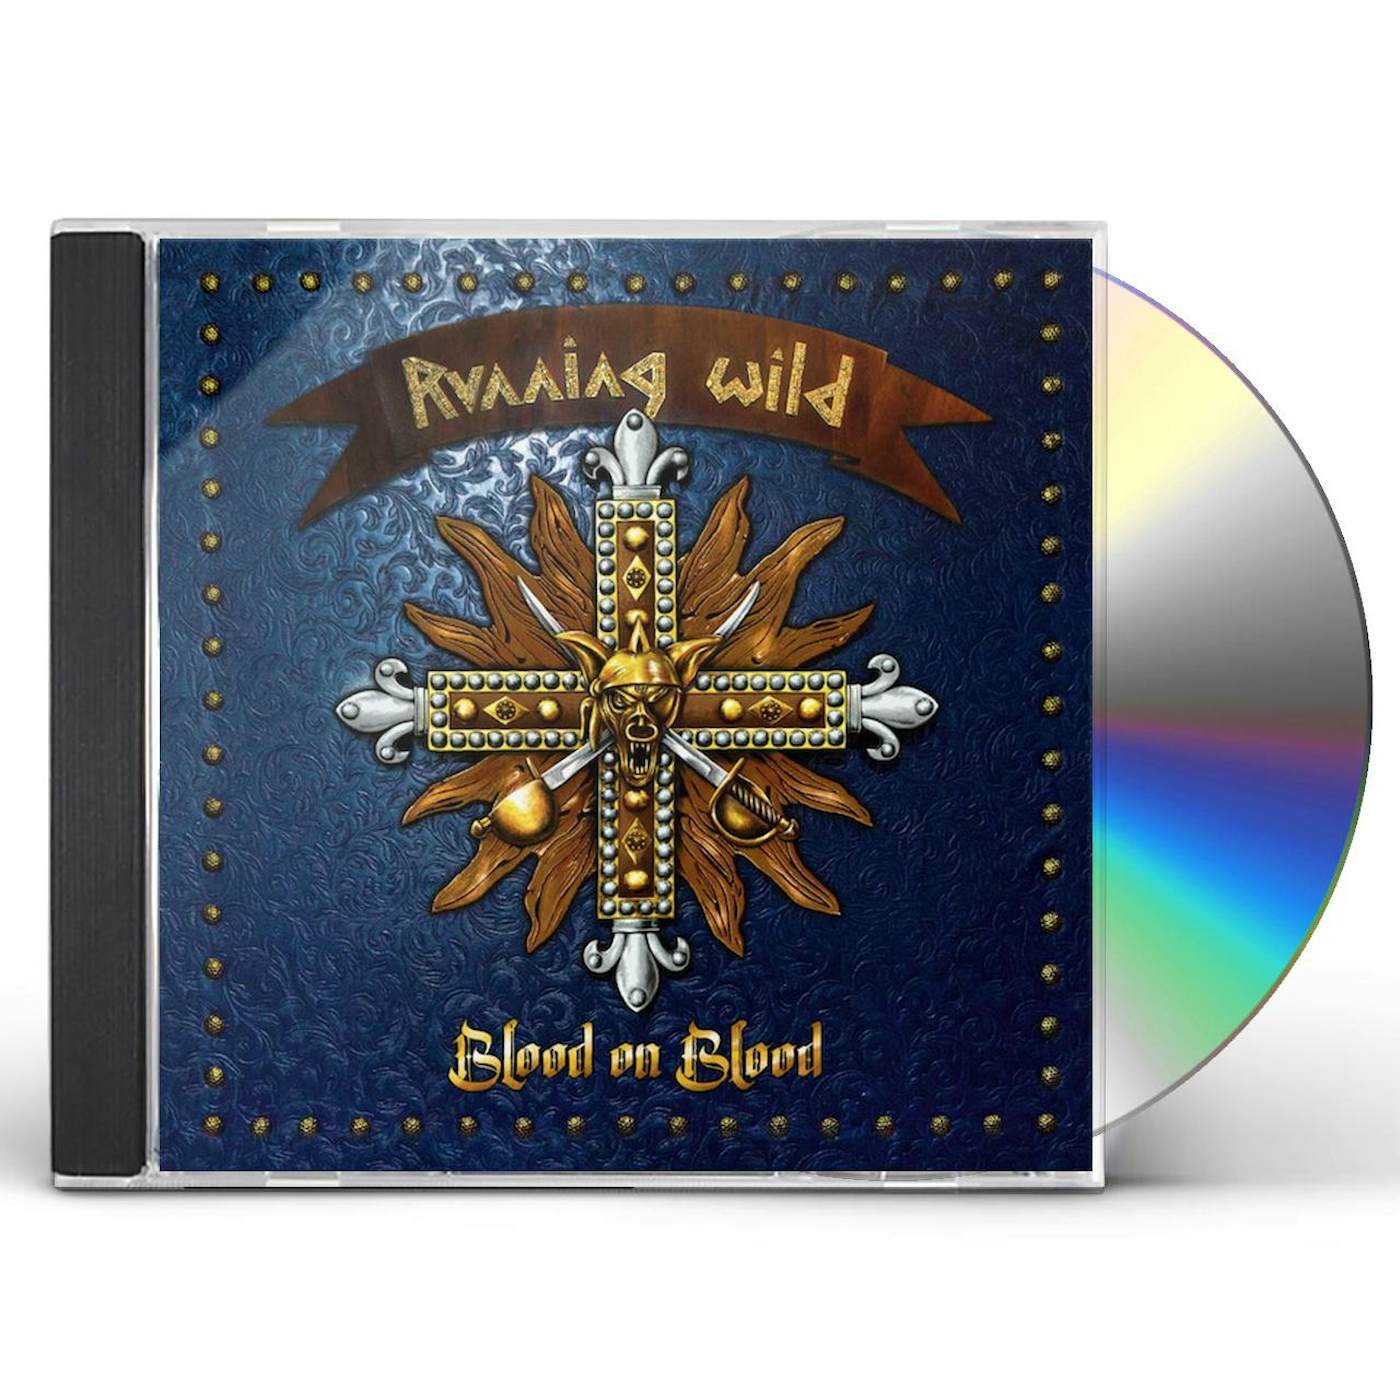 Running Wild BLOOD ON BLOOD CD